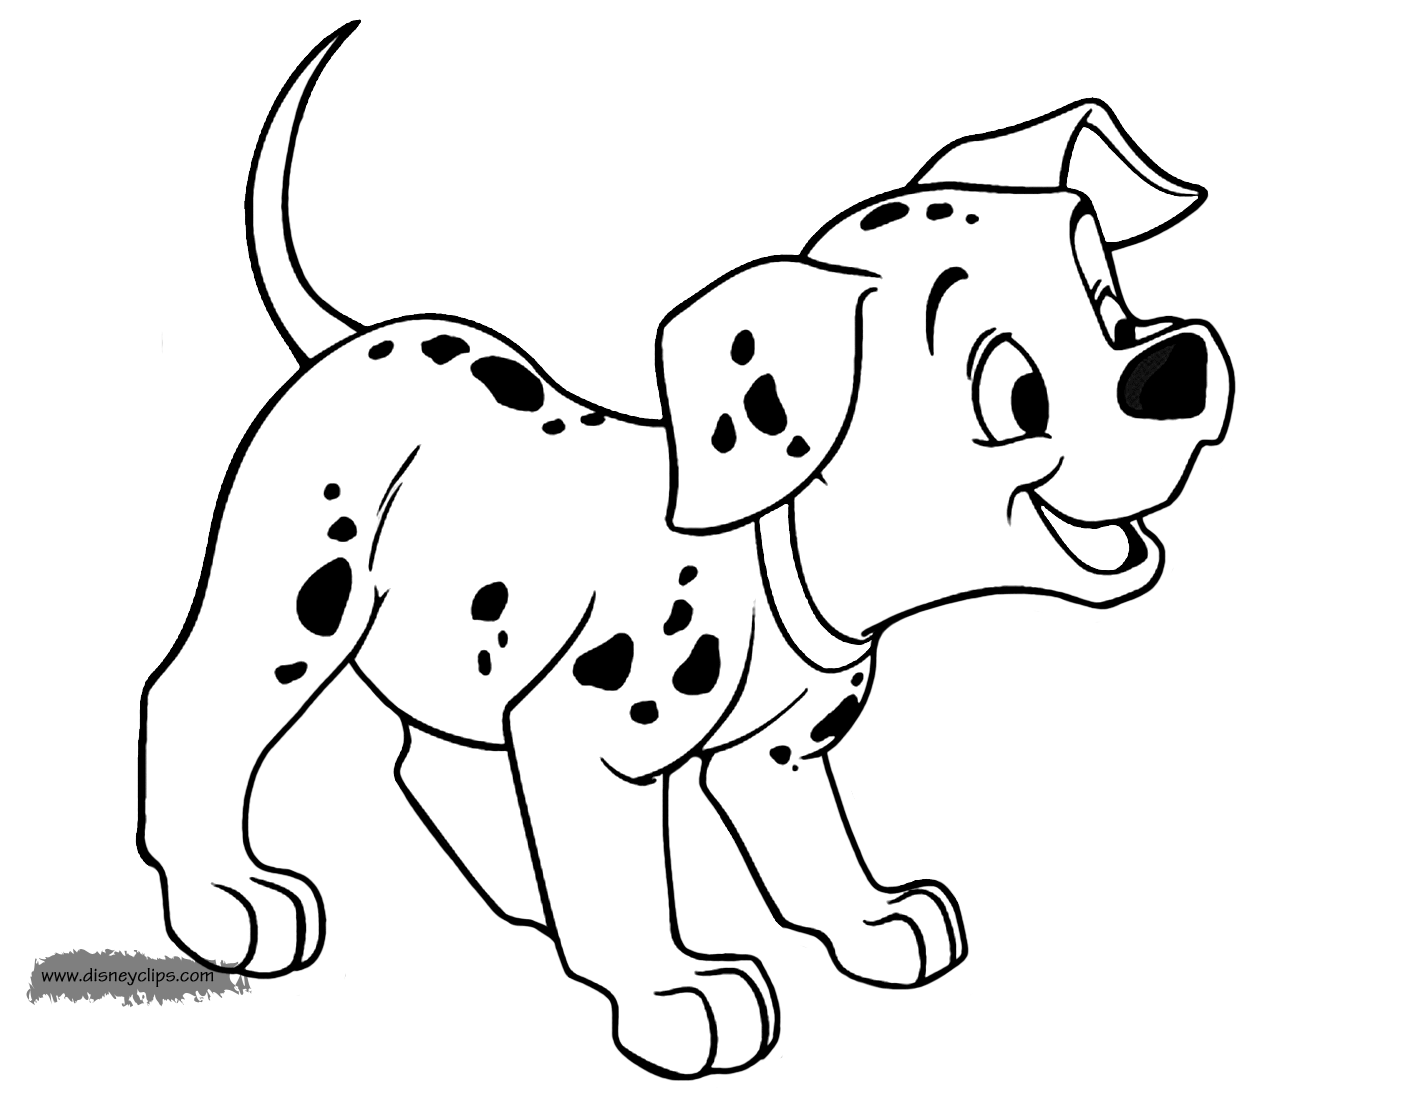 Download Dalmatian Dog Coloring Pages - Kidsuki